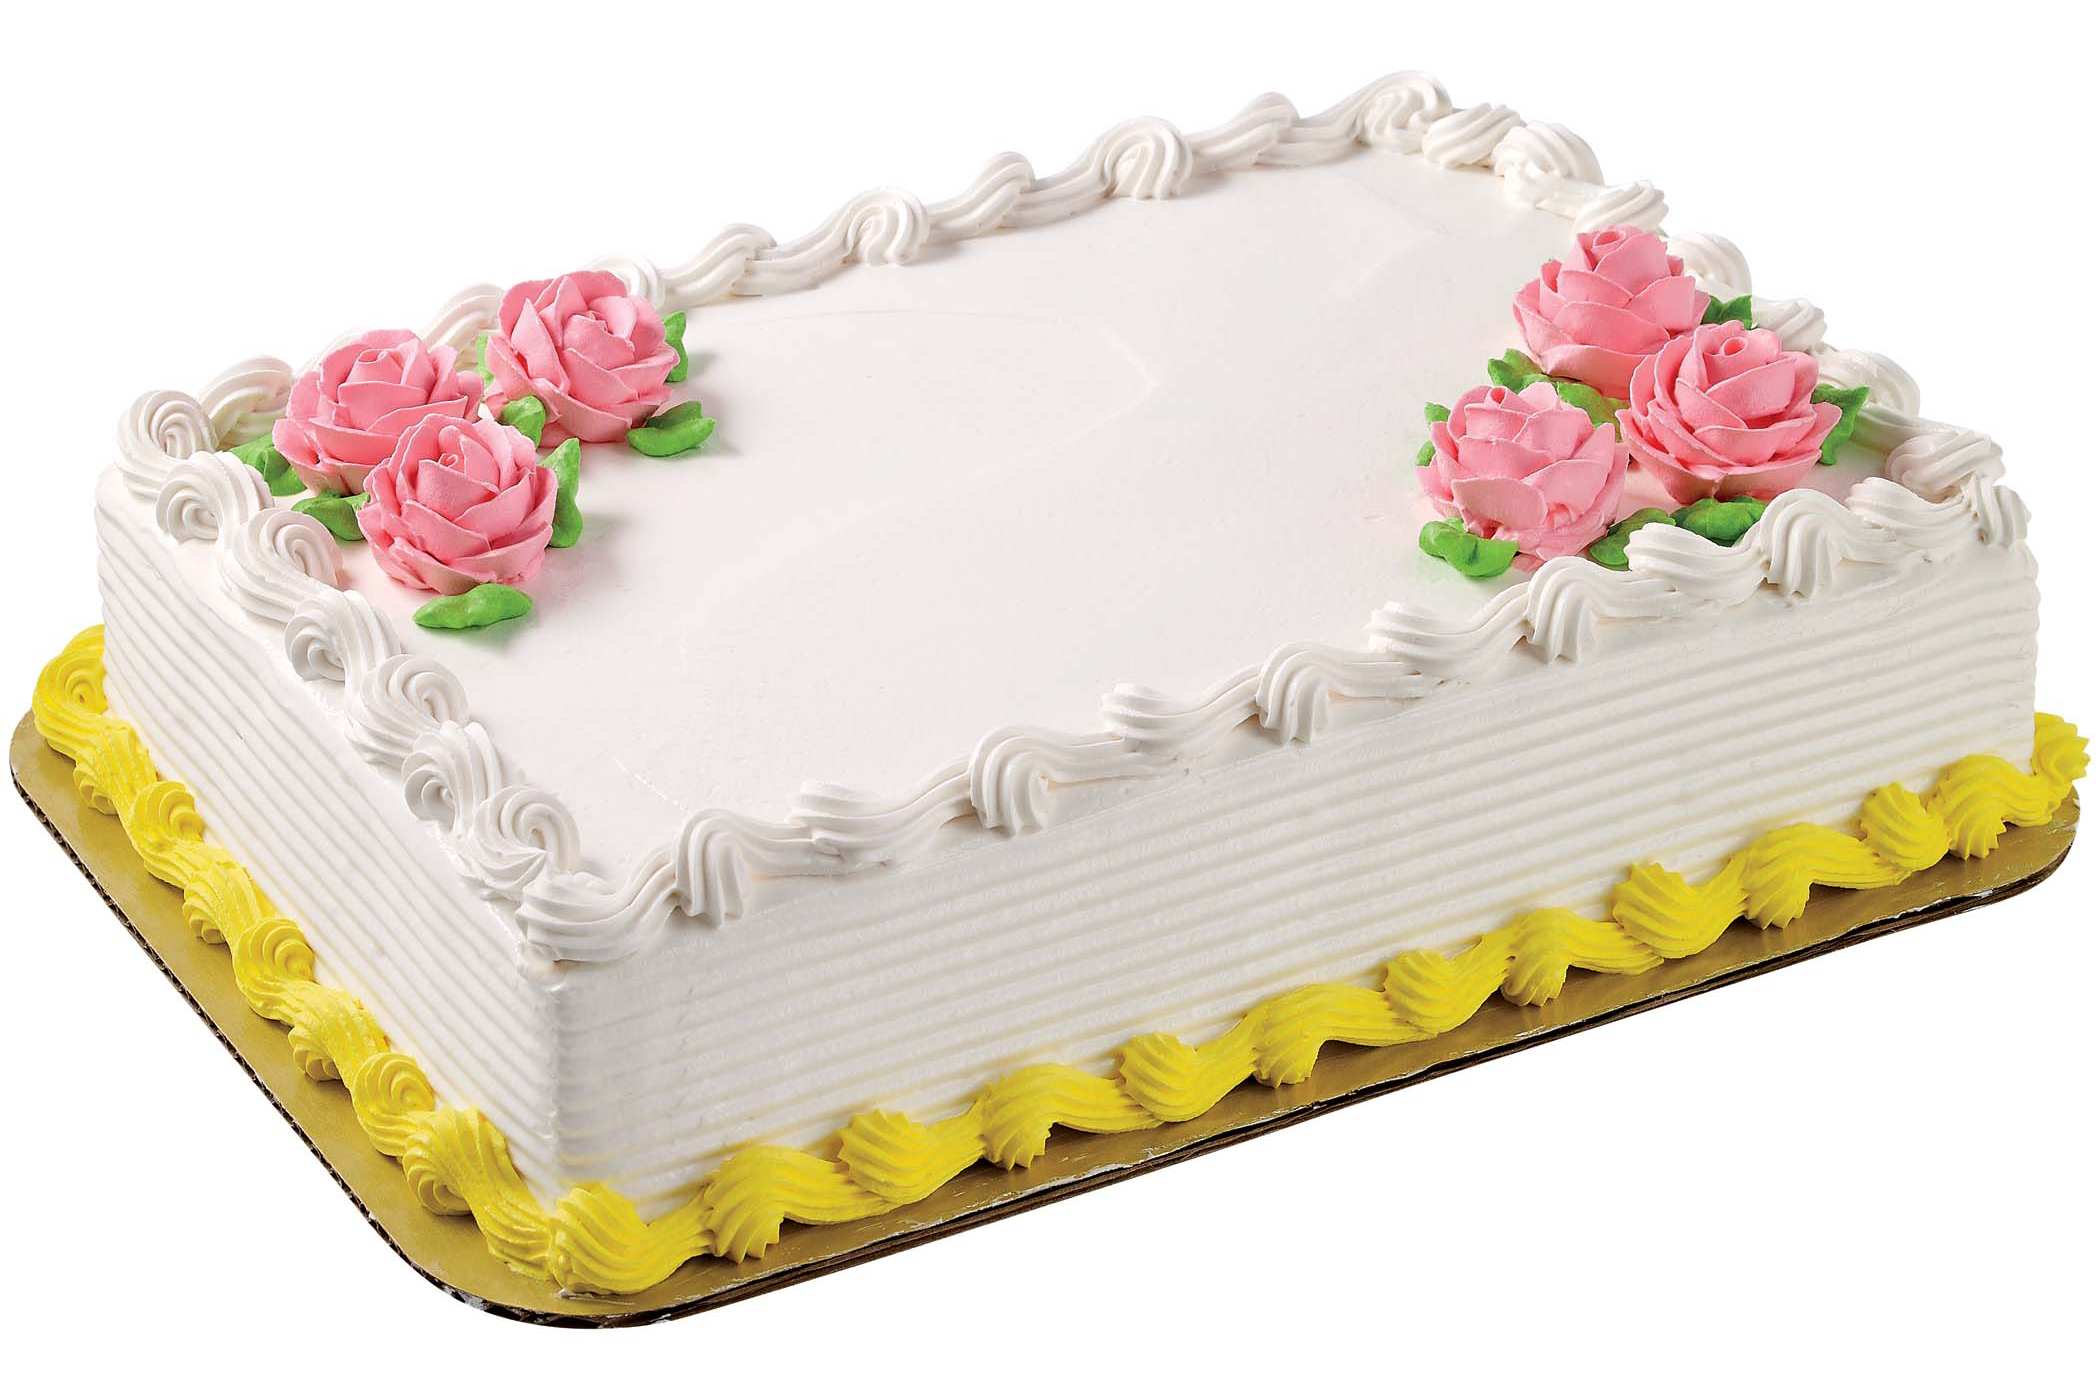 H-E-B Bakery Vanilla Ice Cream Cake; image 1 of 2